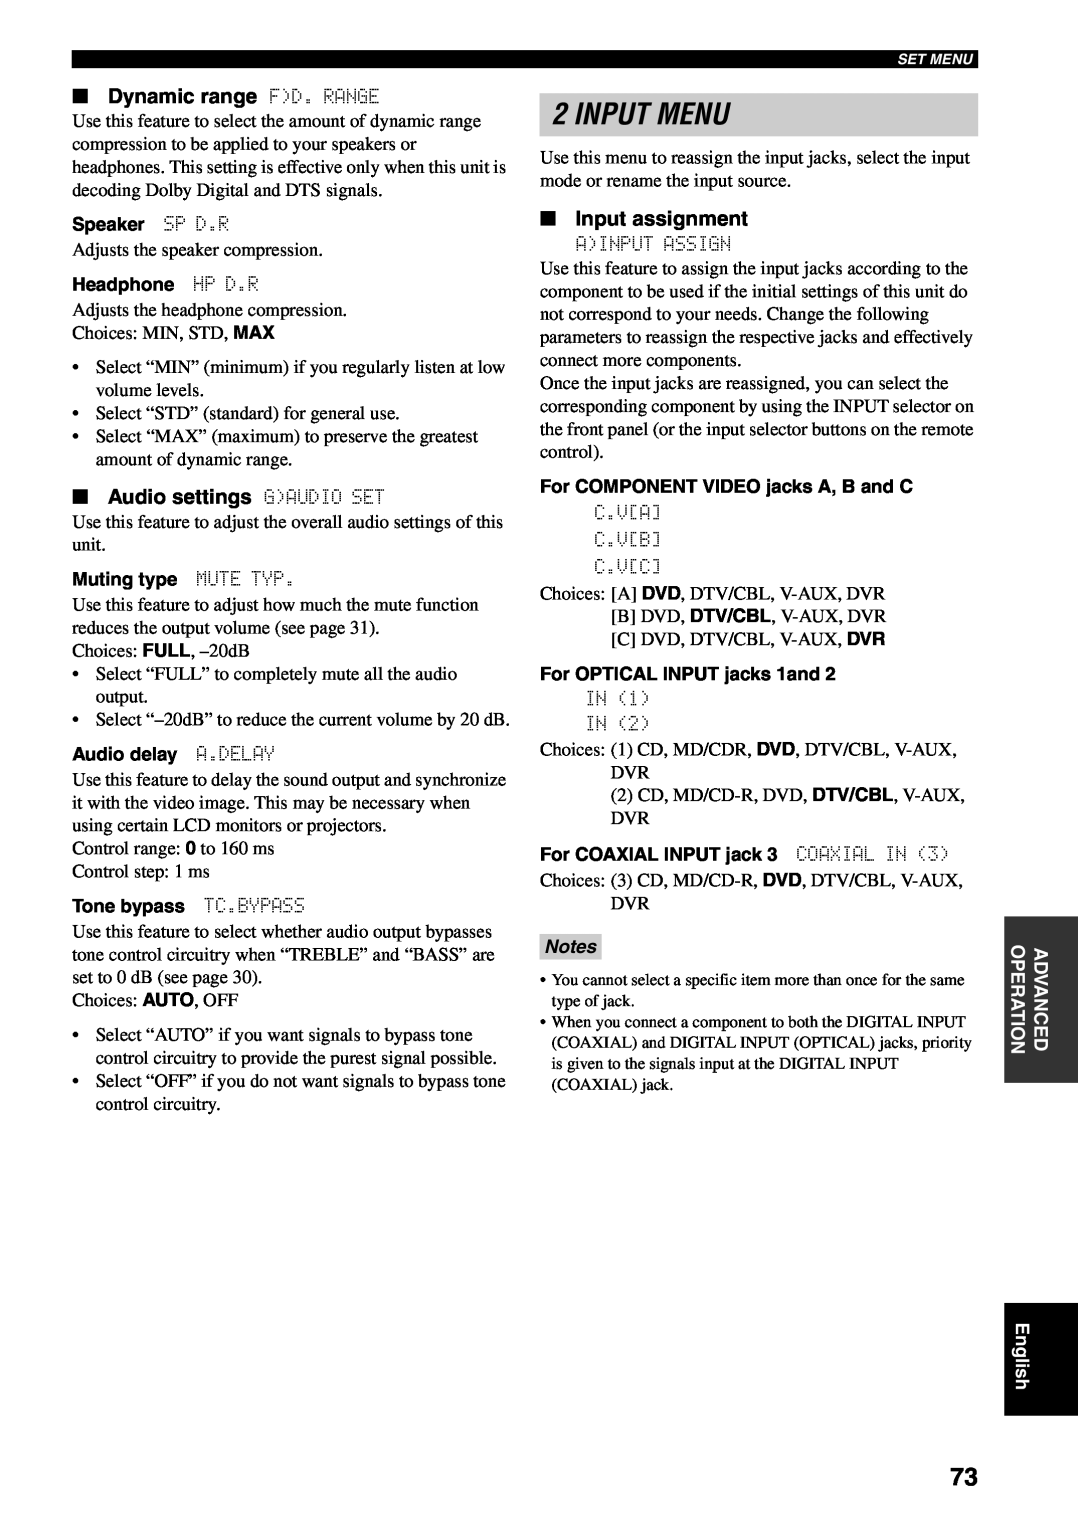 Yamaha RX-V459 owner manual Input Menu, Dynamic range FD. RANGE, Audio settings GAUDIO SET, Input assignment, Notes 